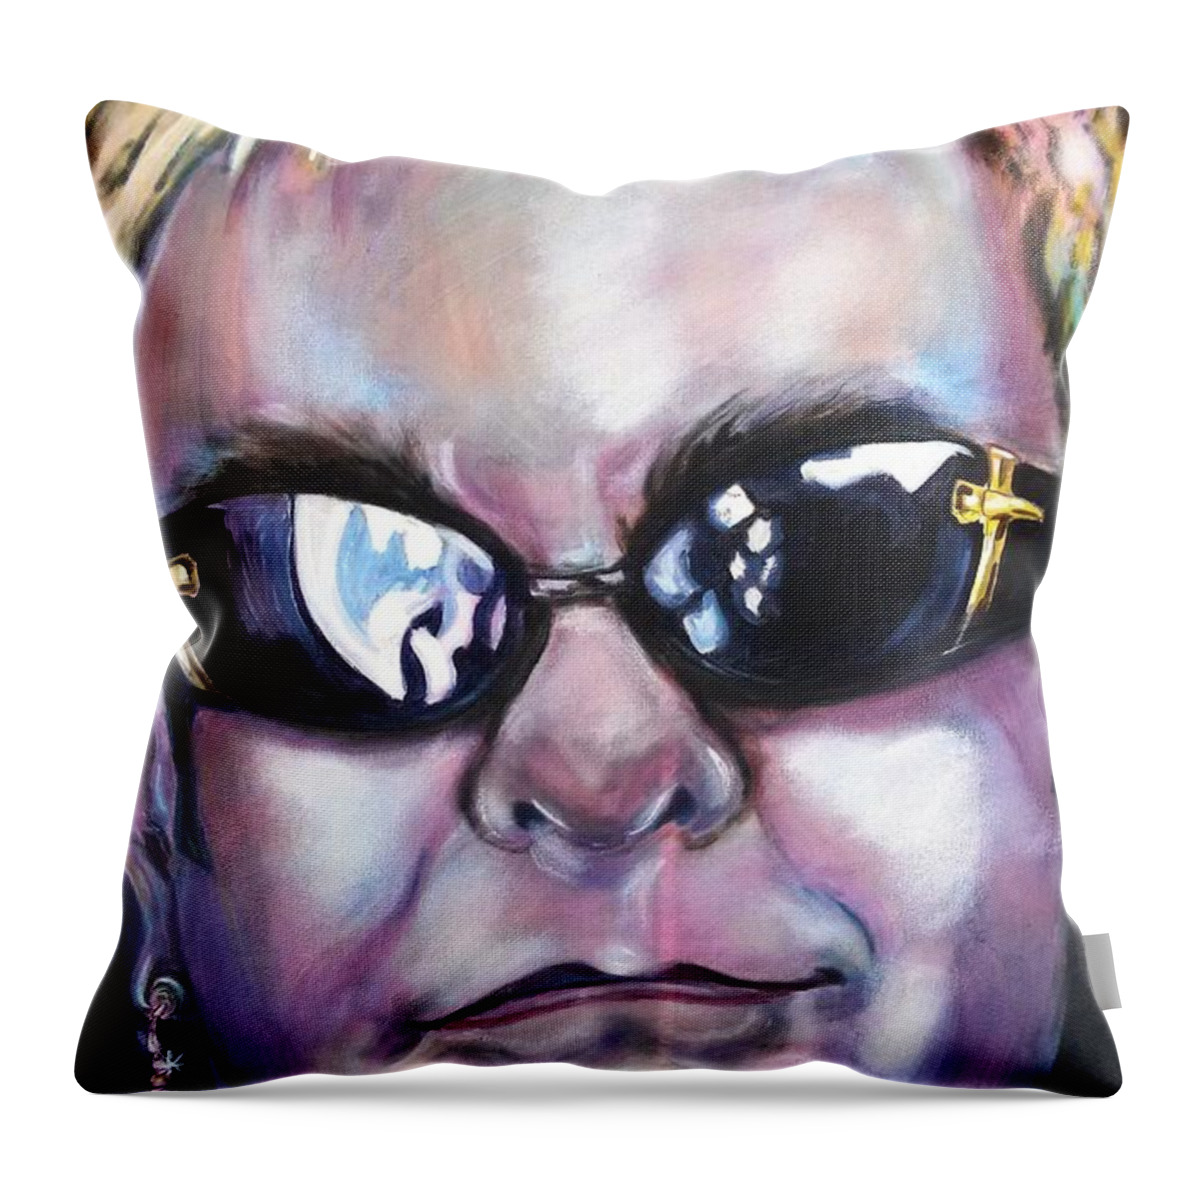 Elton John Rock Legend Throw Pillow featuring the painting Elton John by Misty Smith